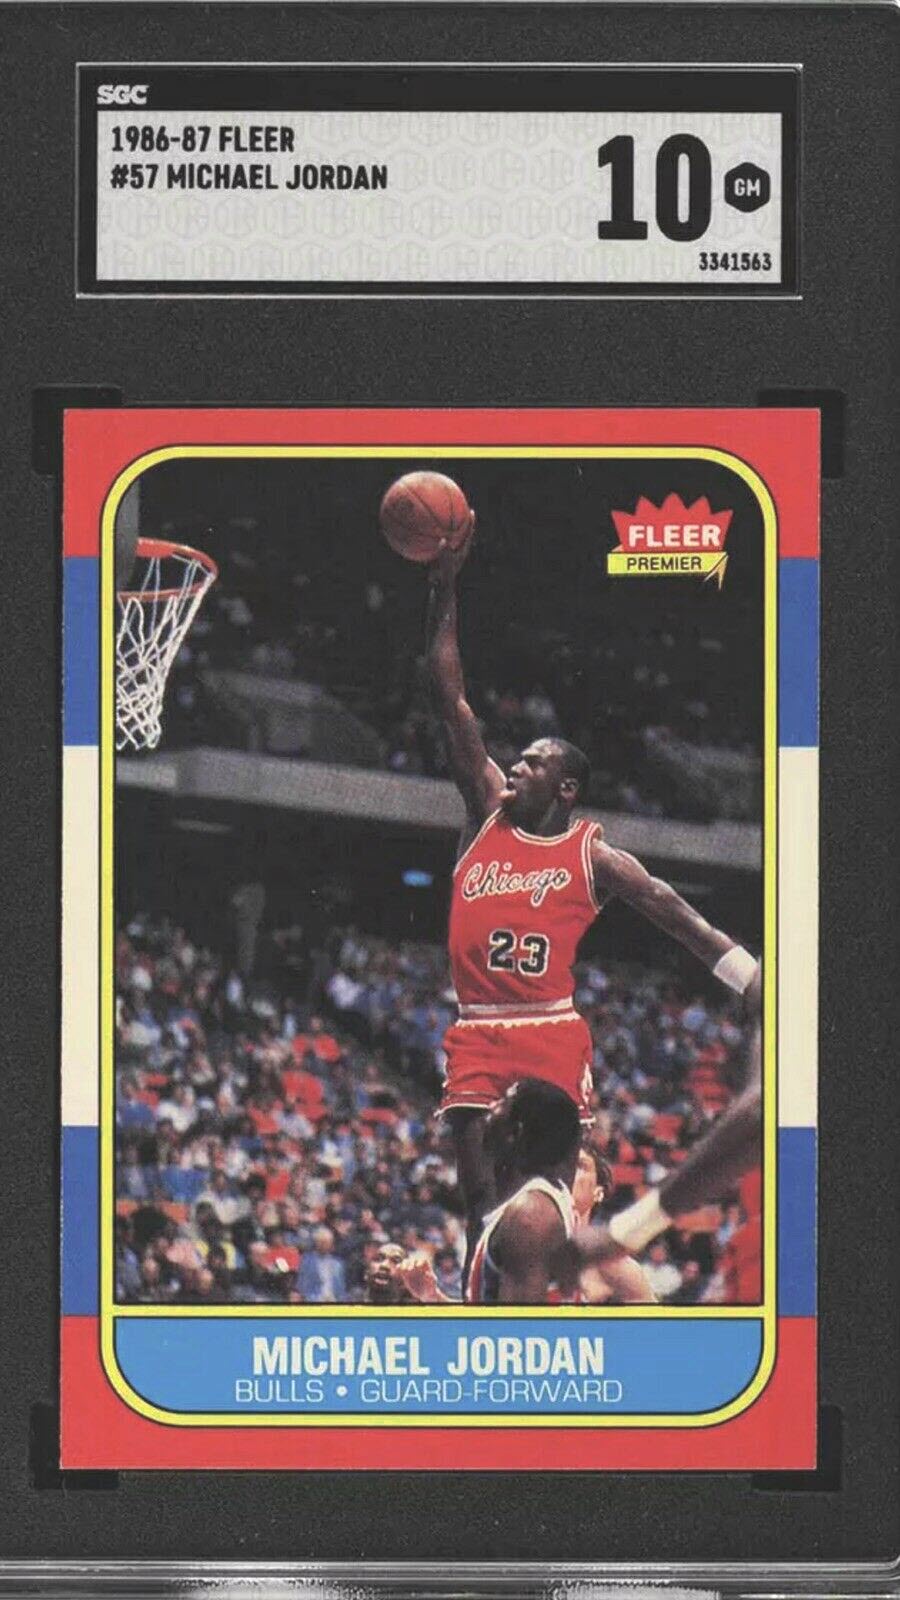 Lot - 1985 NBA All Star Game Ticket Stub, Program, Slam Dunk